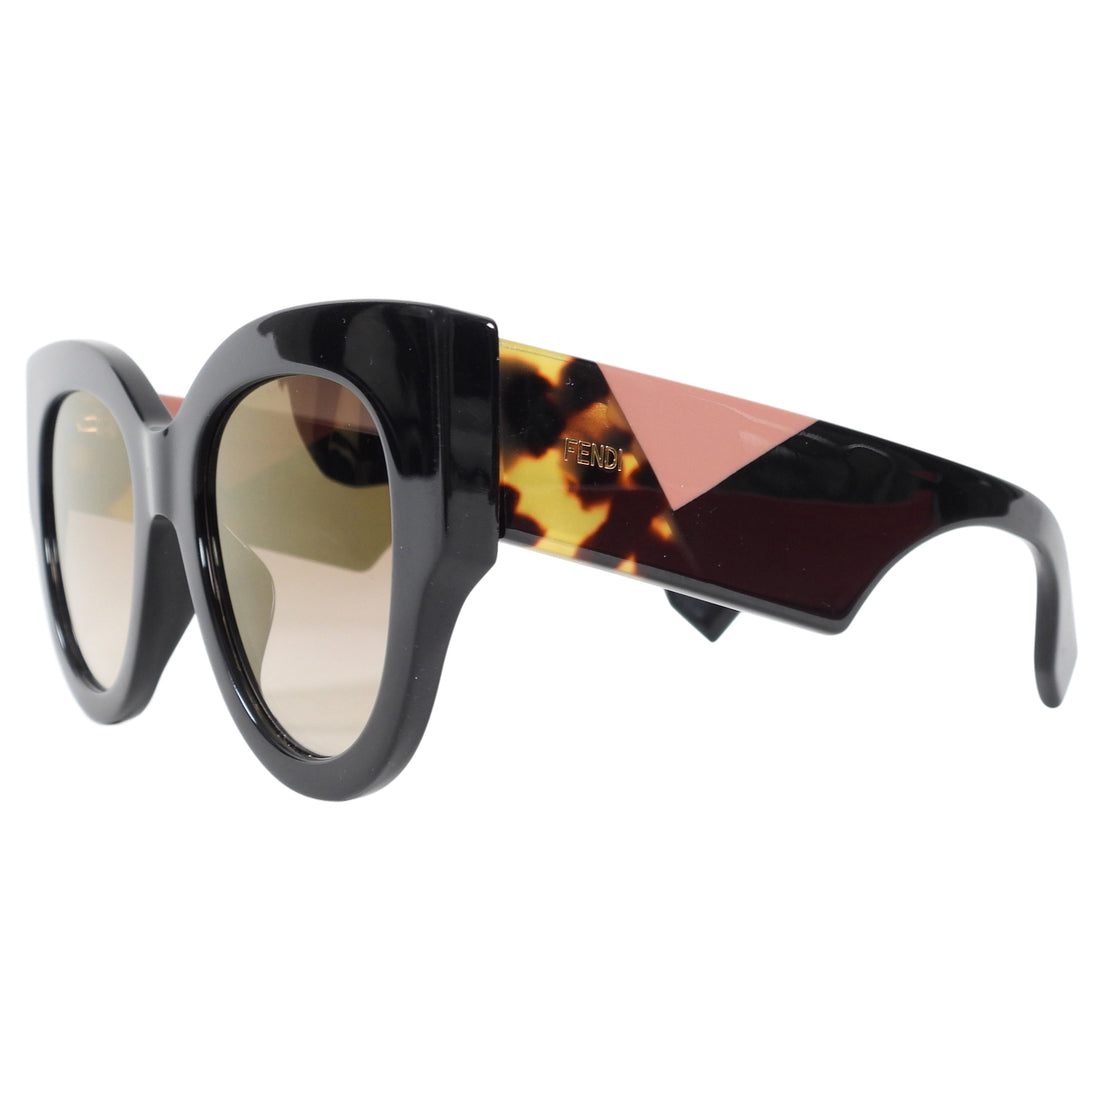 Fendi Black Sunglasses with Color Block Arms FF 0264